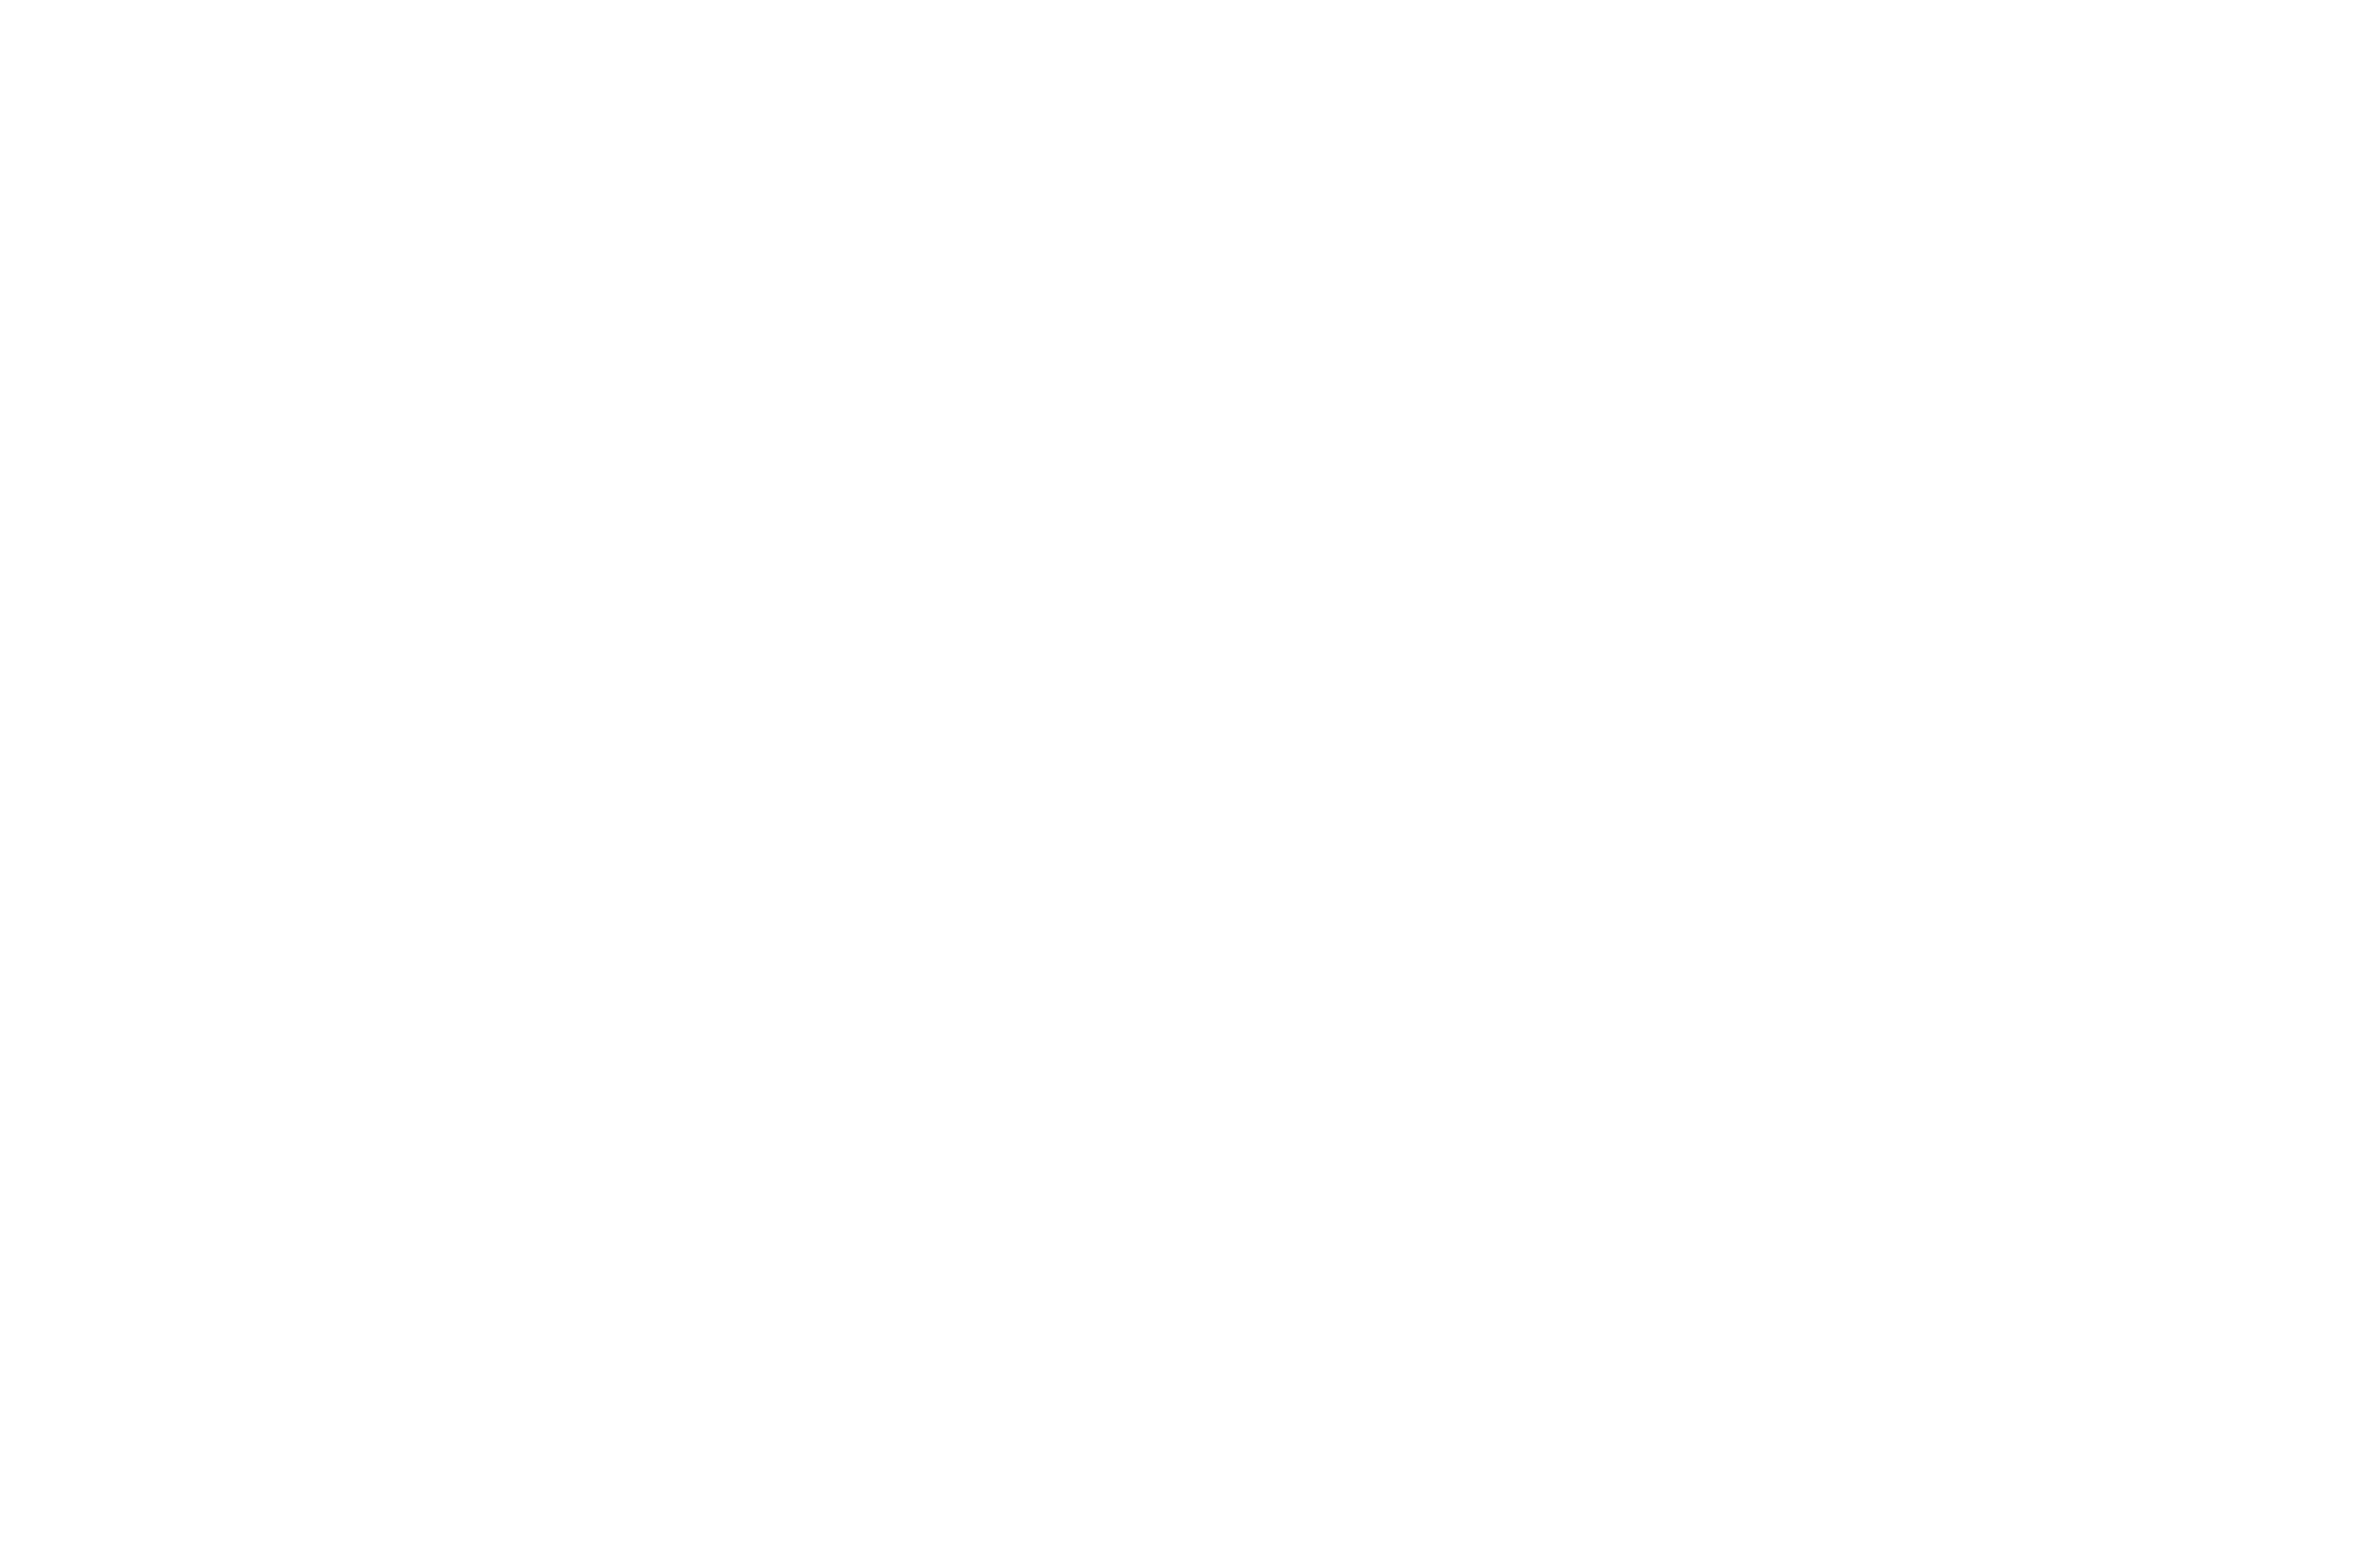 Bardic Compass w (1)